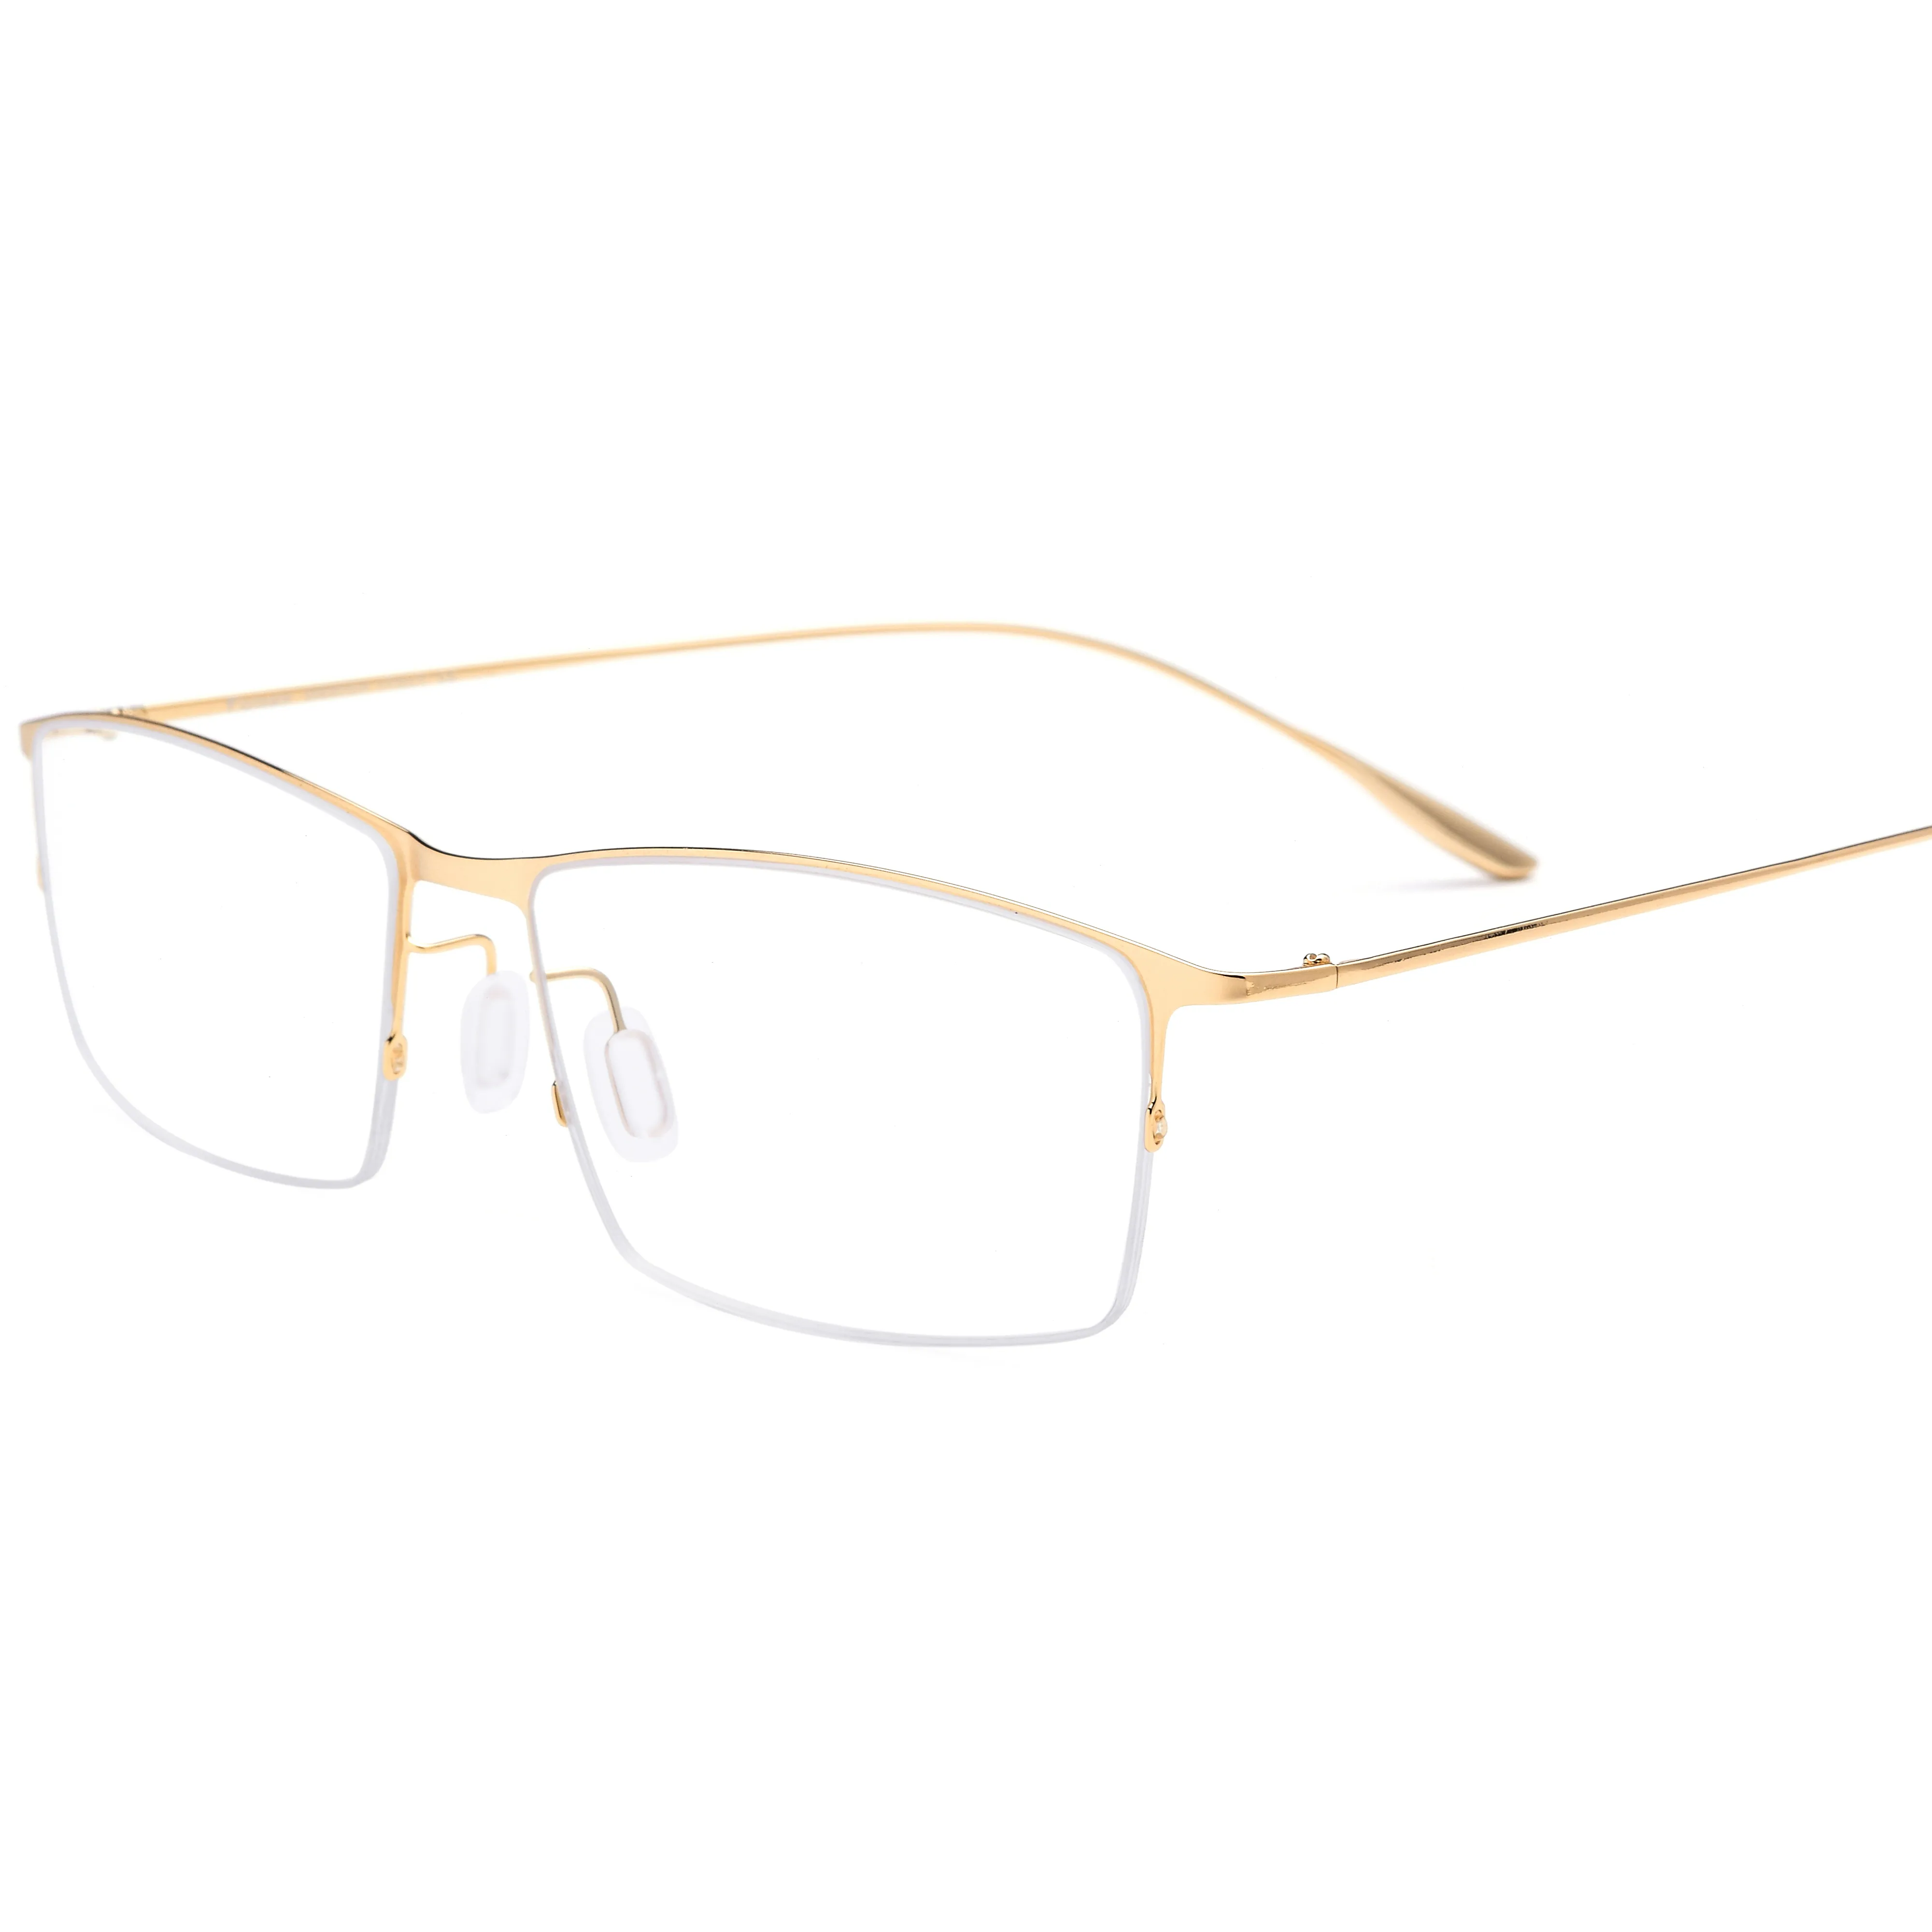 New Fashion Design 100% Pure Titanium Glasses Eyewear Optical Frame For Ladies Men